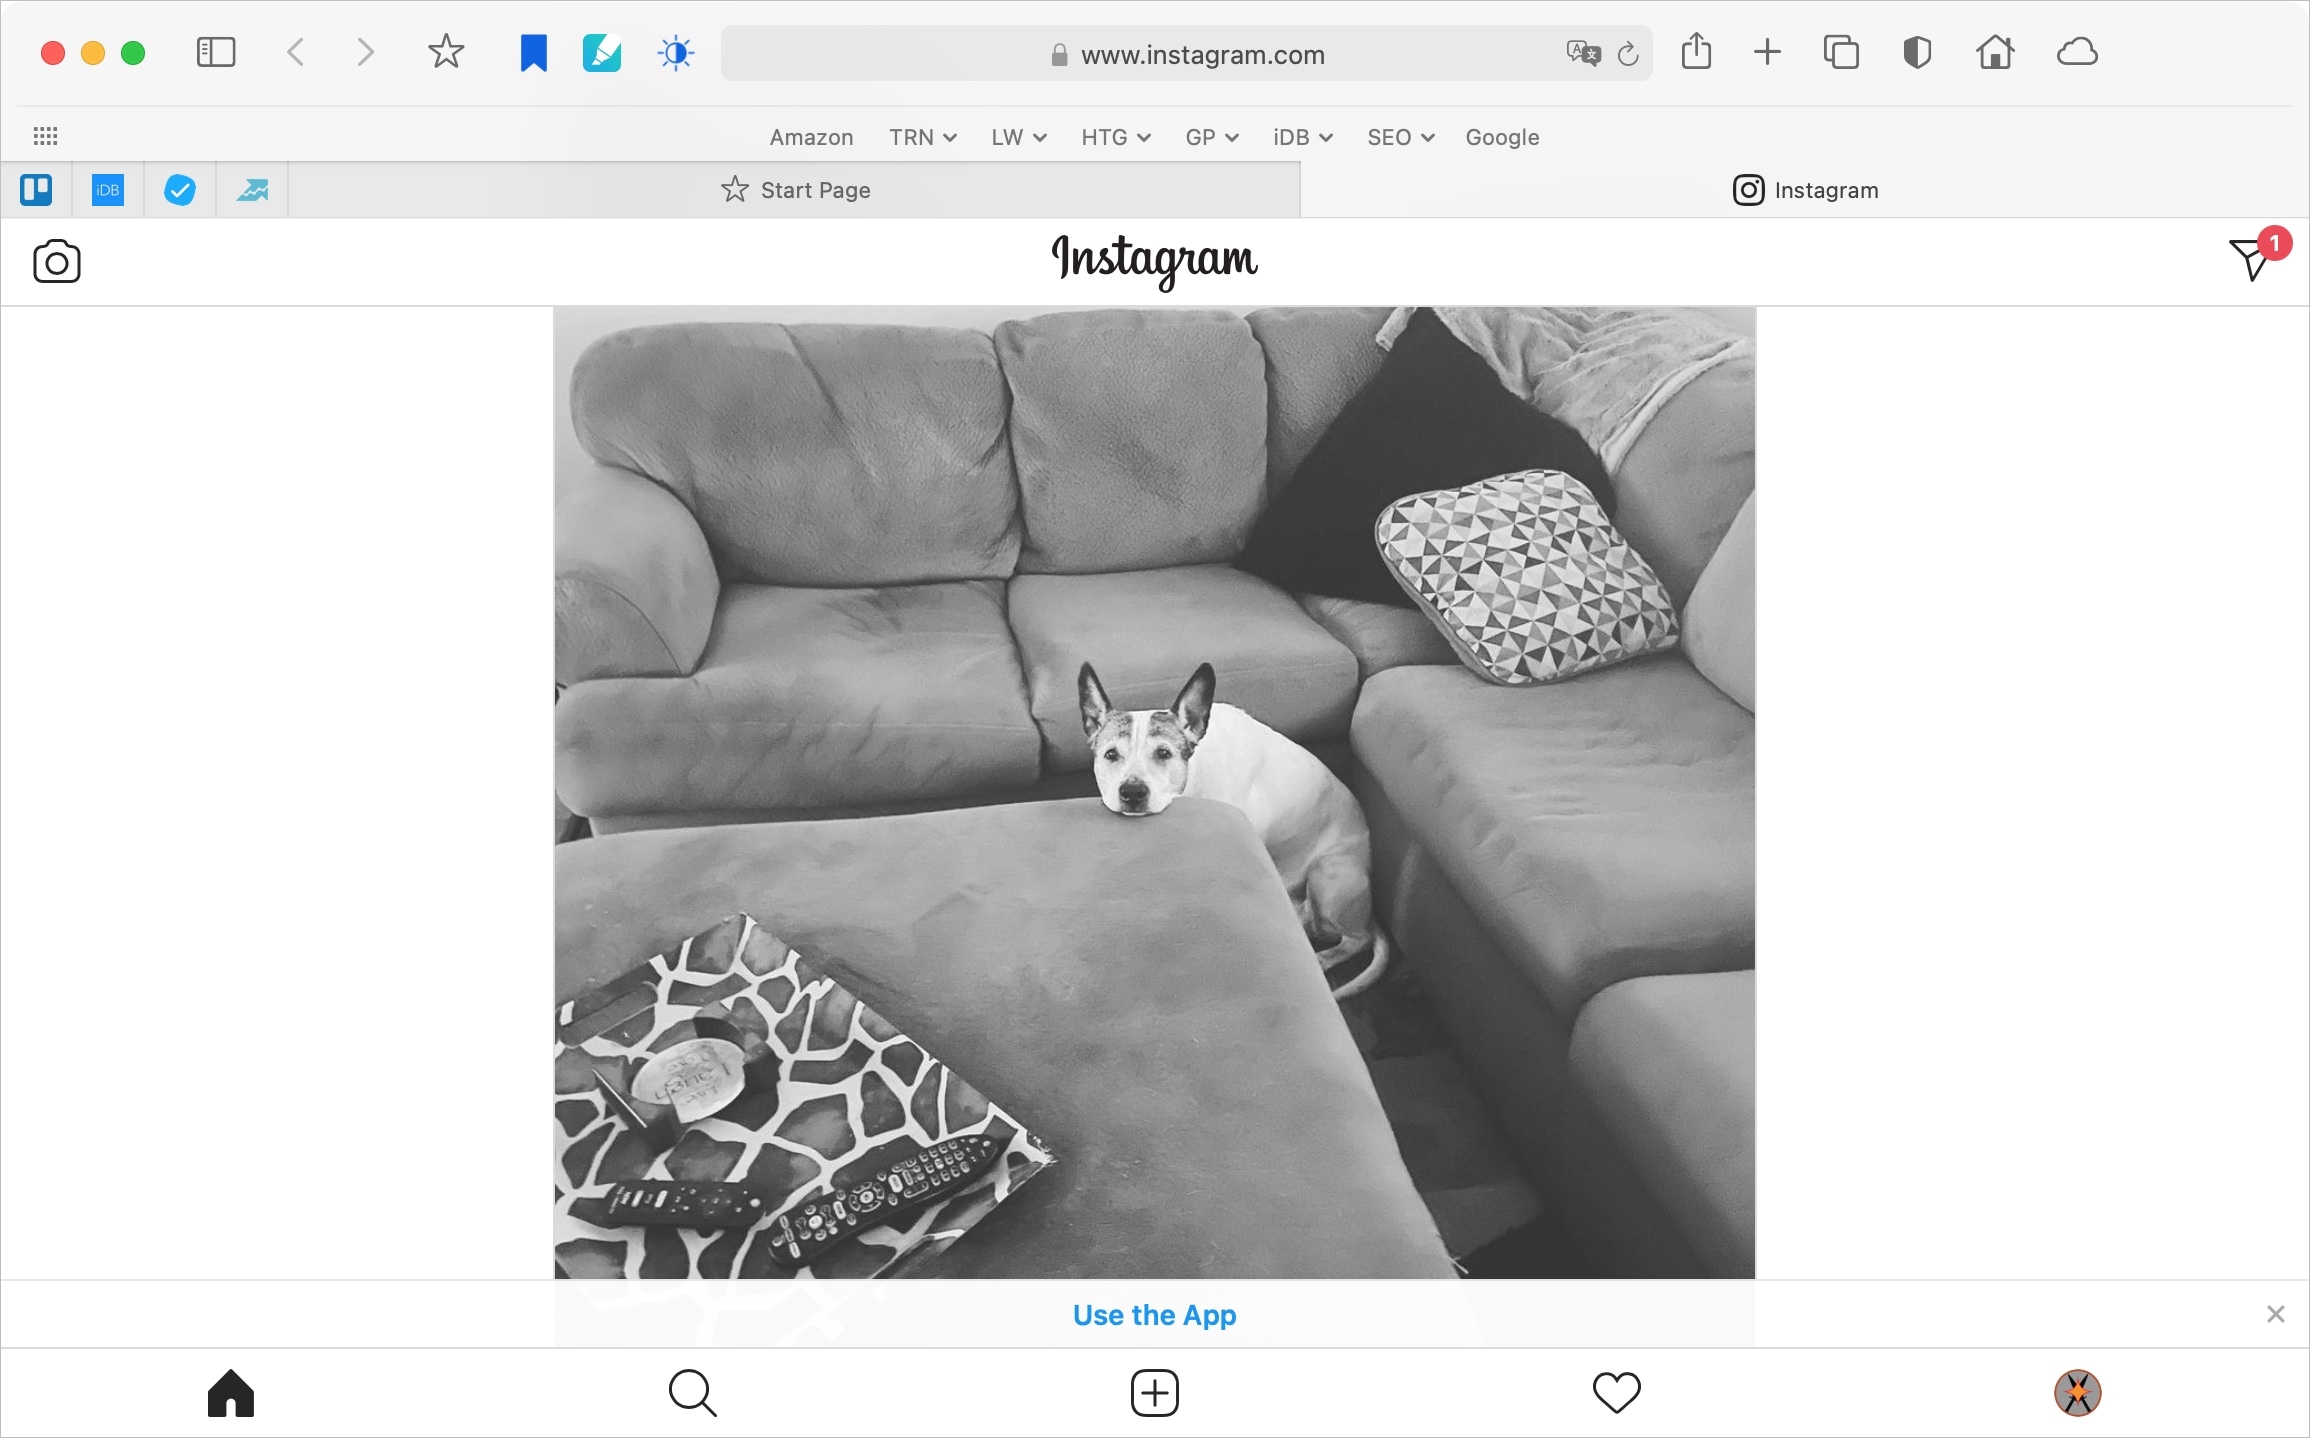 Instagram Post from Safari on Mac